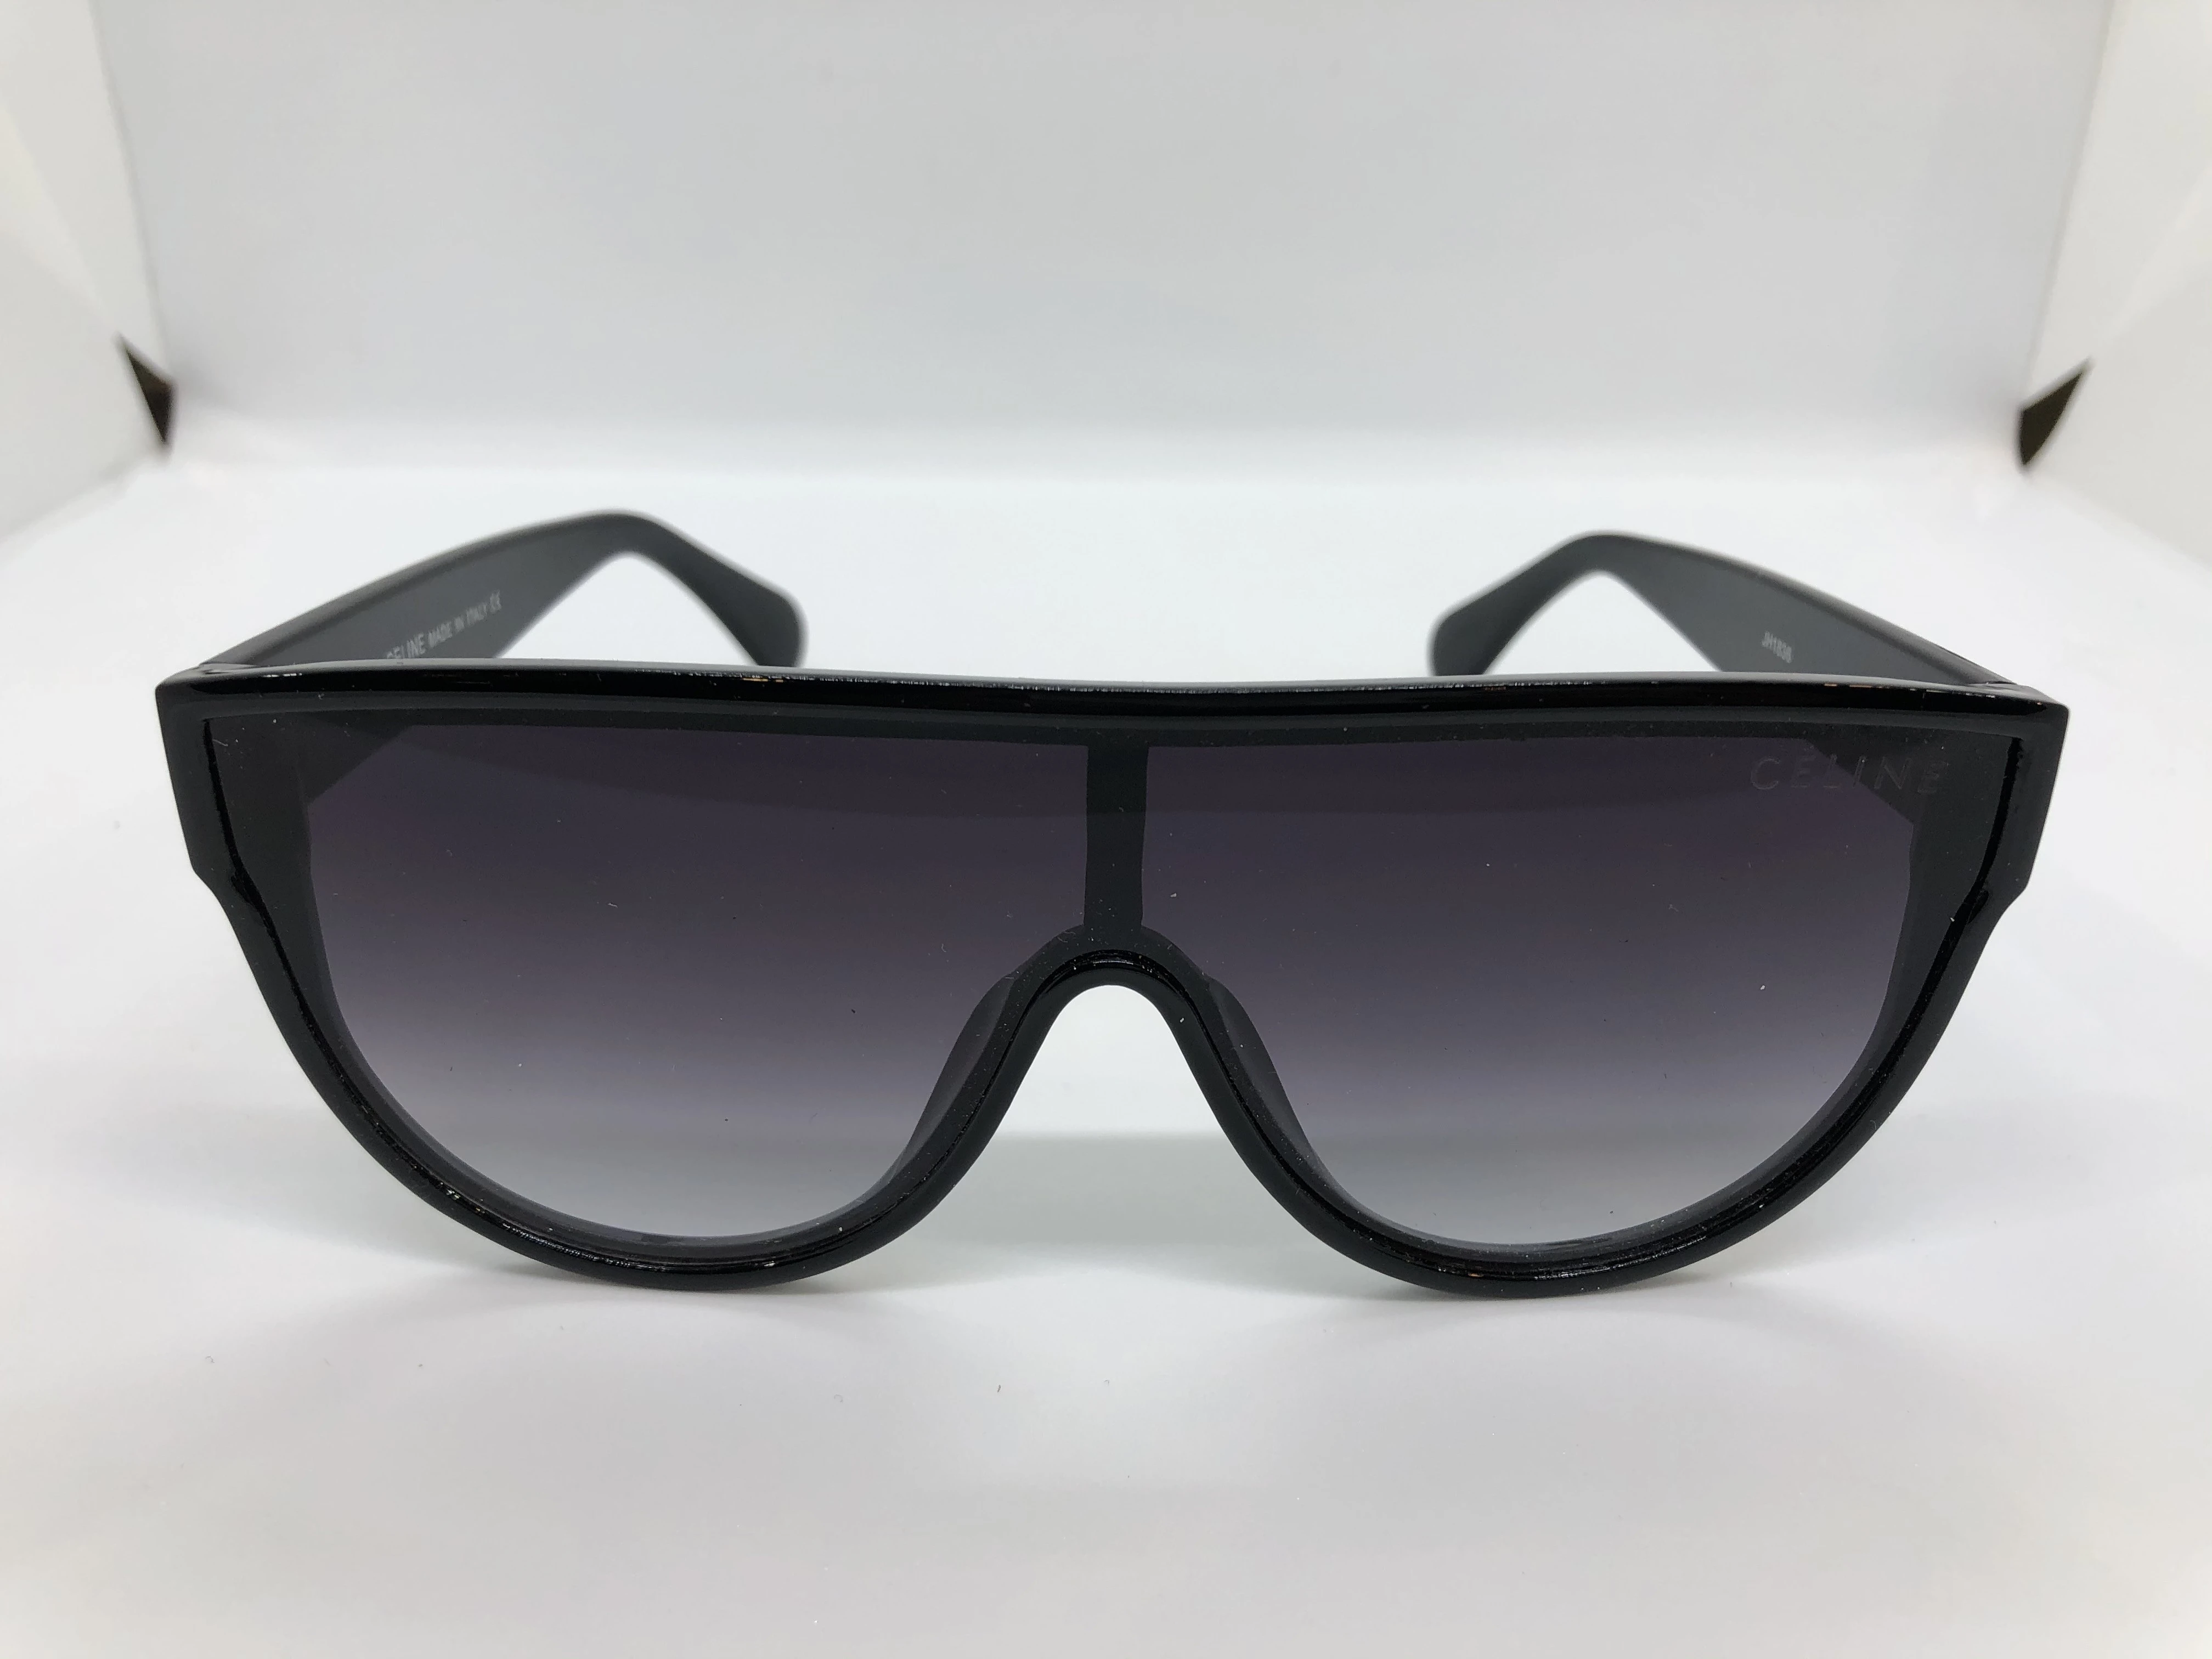 Celine sunglasses - black polycarbonate frame - black gradient lenses - black polycarbonate arm - white logo - for women